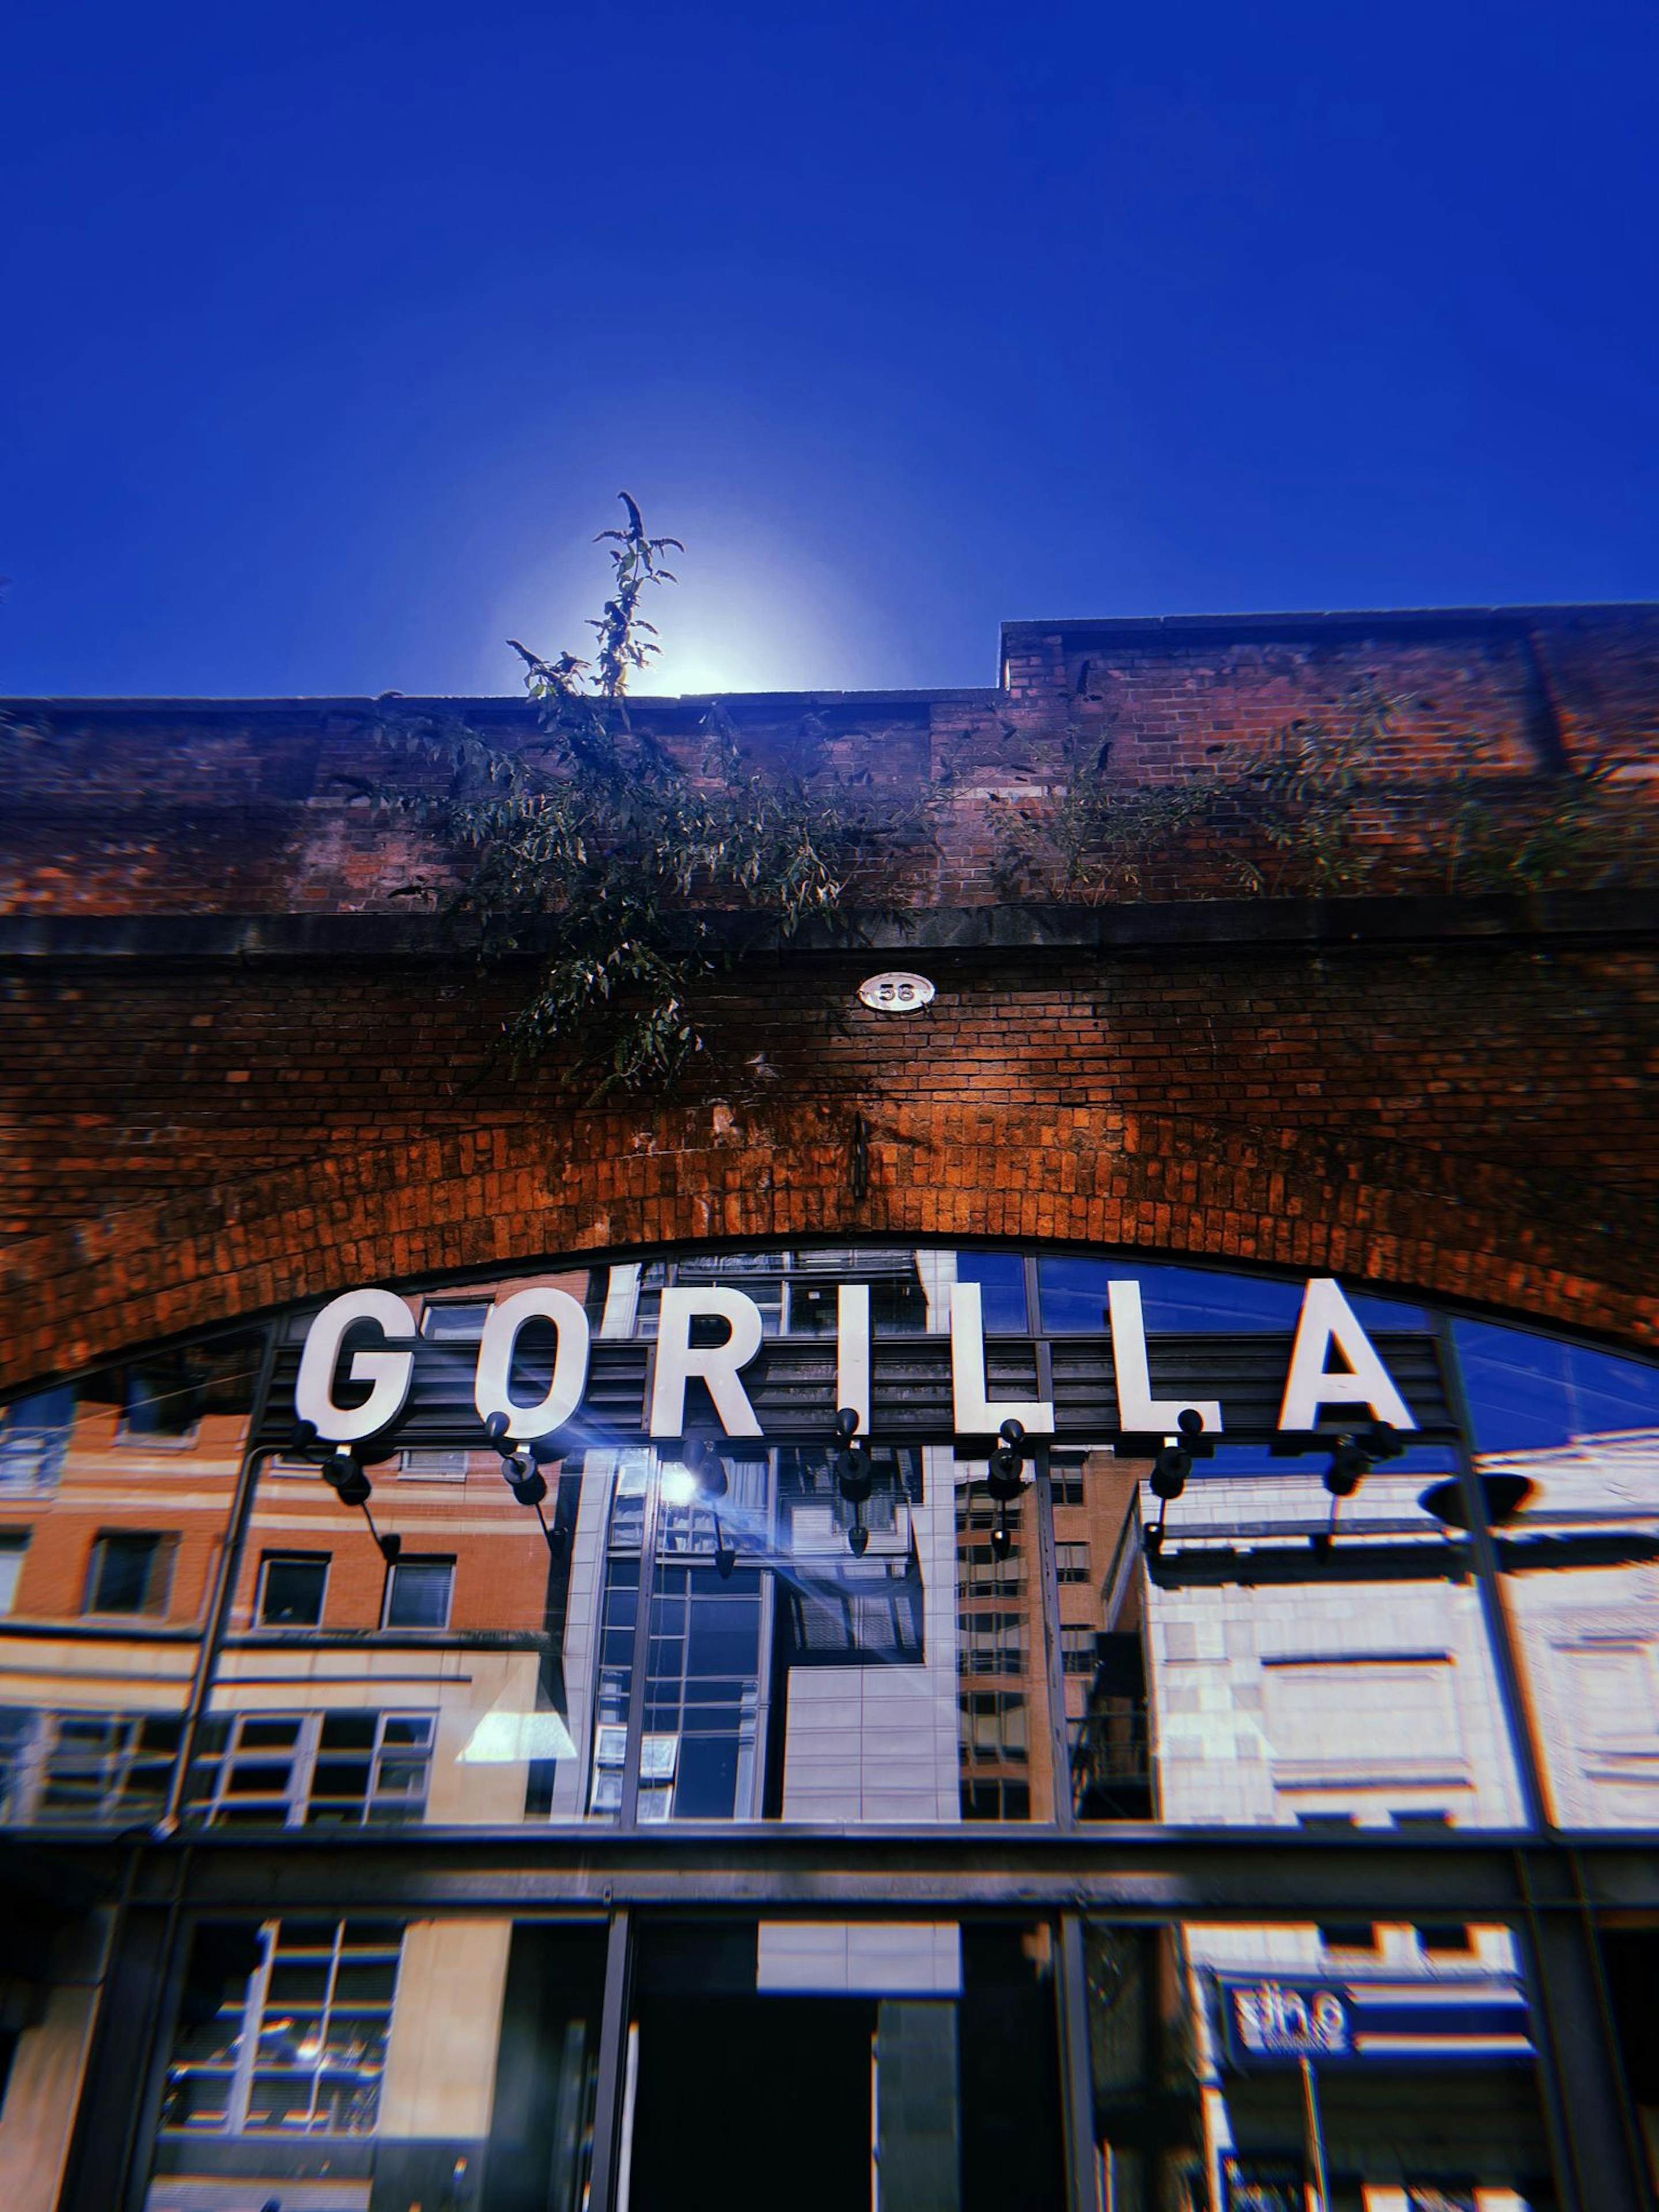 Gorilla Manchester - Music Hall image 2